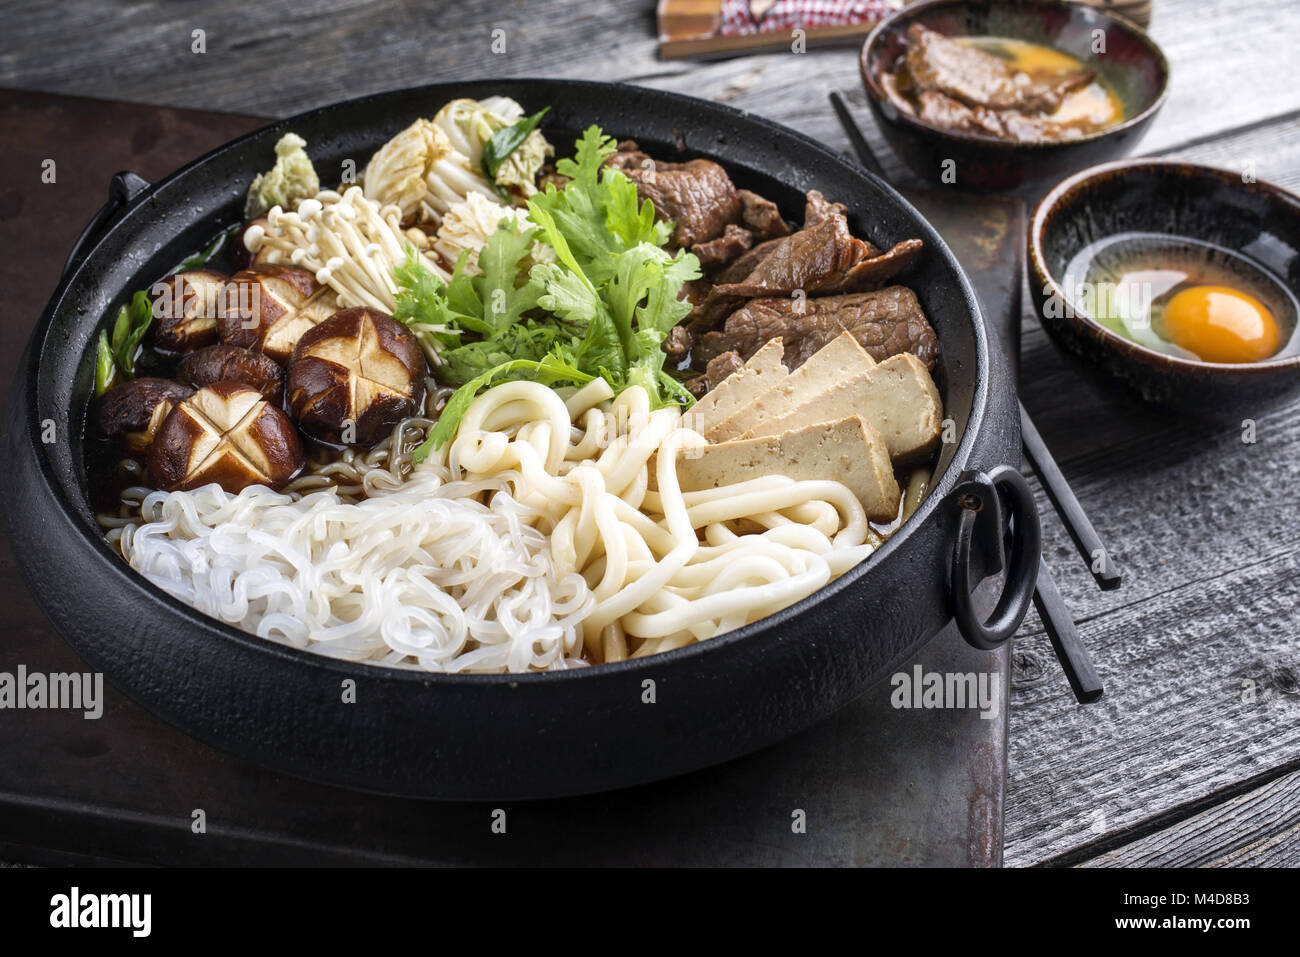 https://c8.alamy.com/comp/M4D8B3/sukiyaki-in-traditional-japanese-cast-iron-pot-M4D8B3.jpg